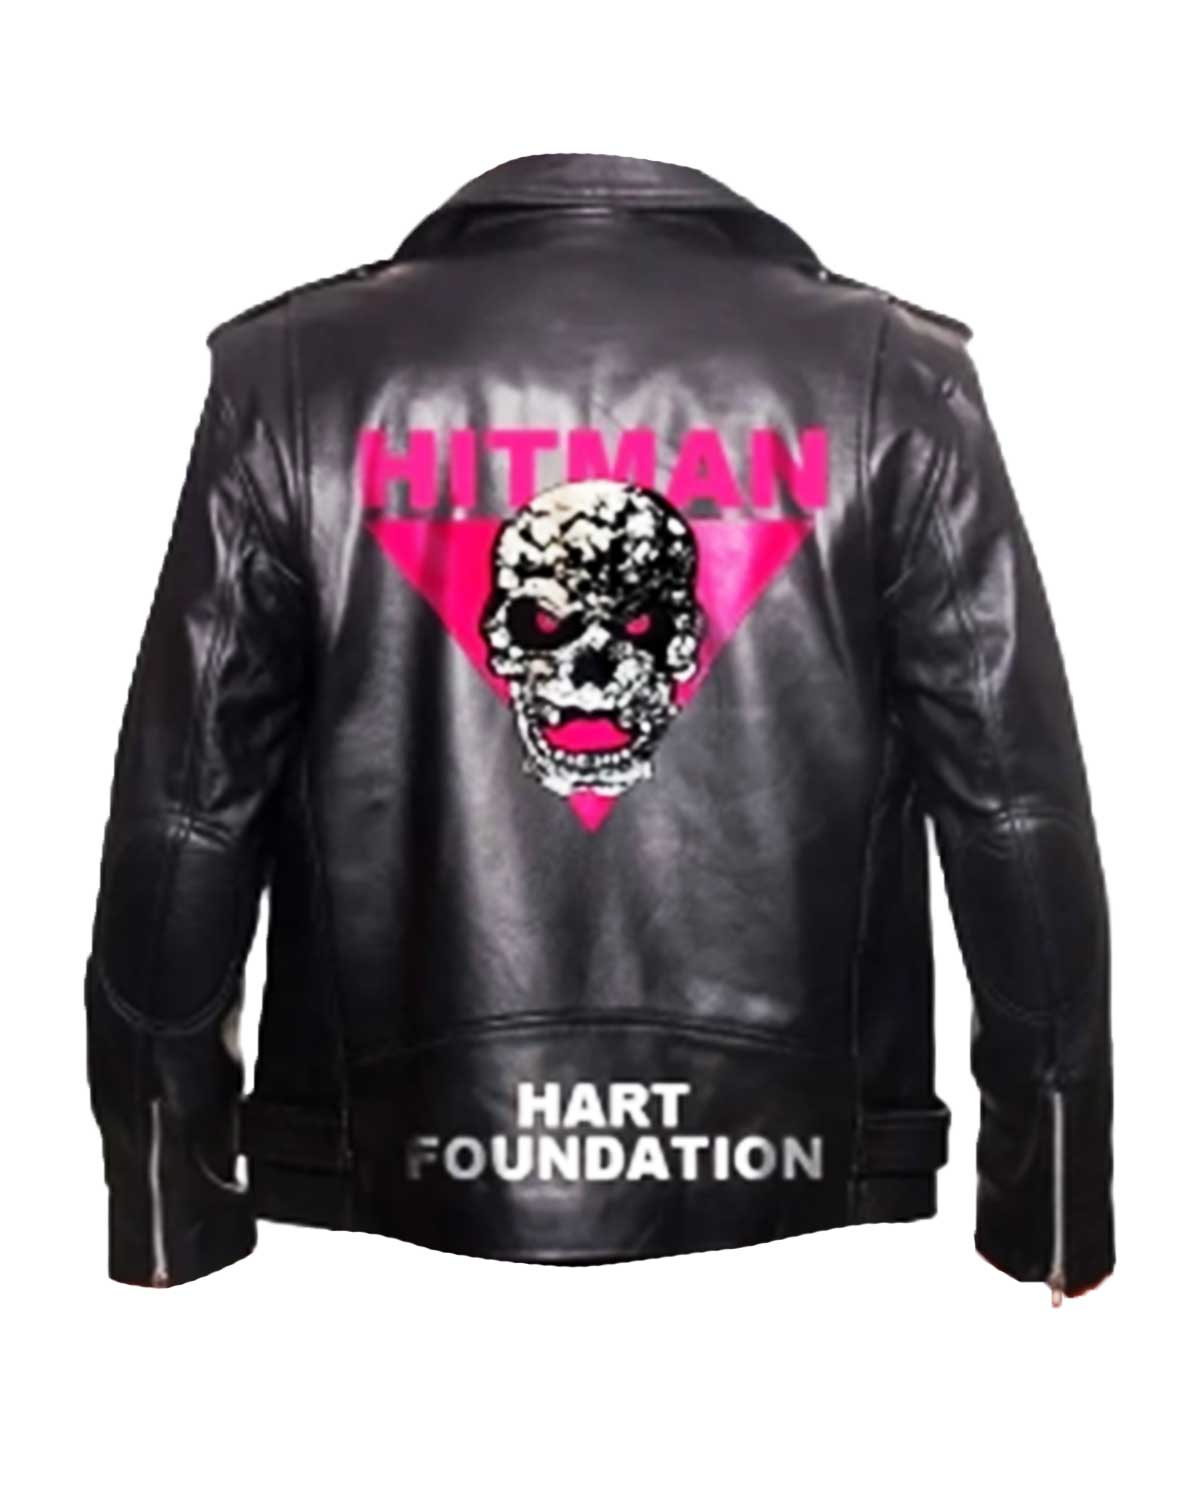 WWE Bret Hart Foundation Leather Biker Jacket | Elite Jacket